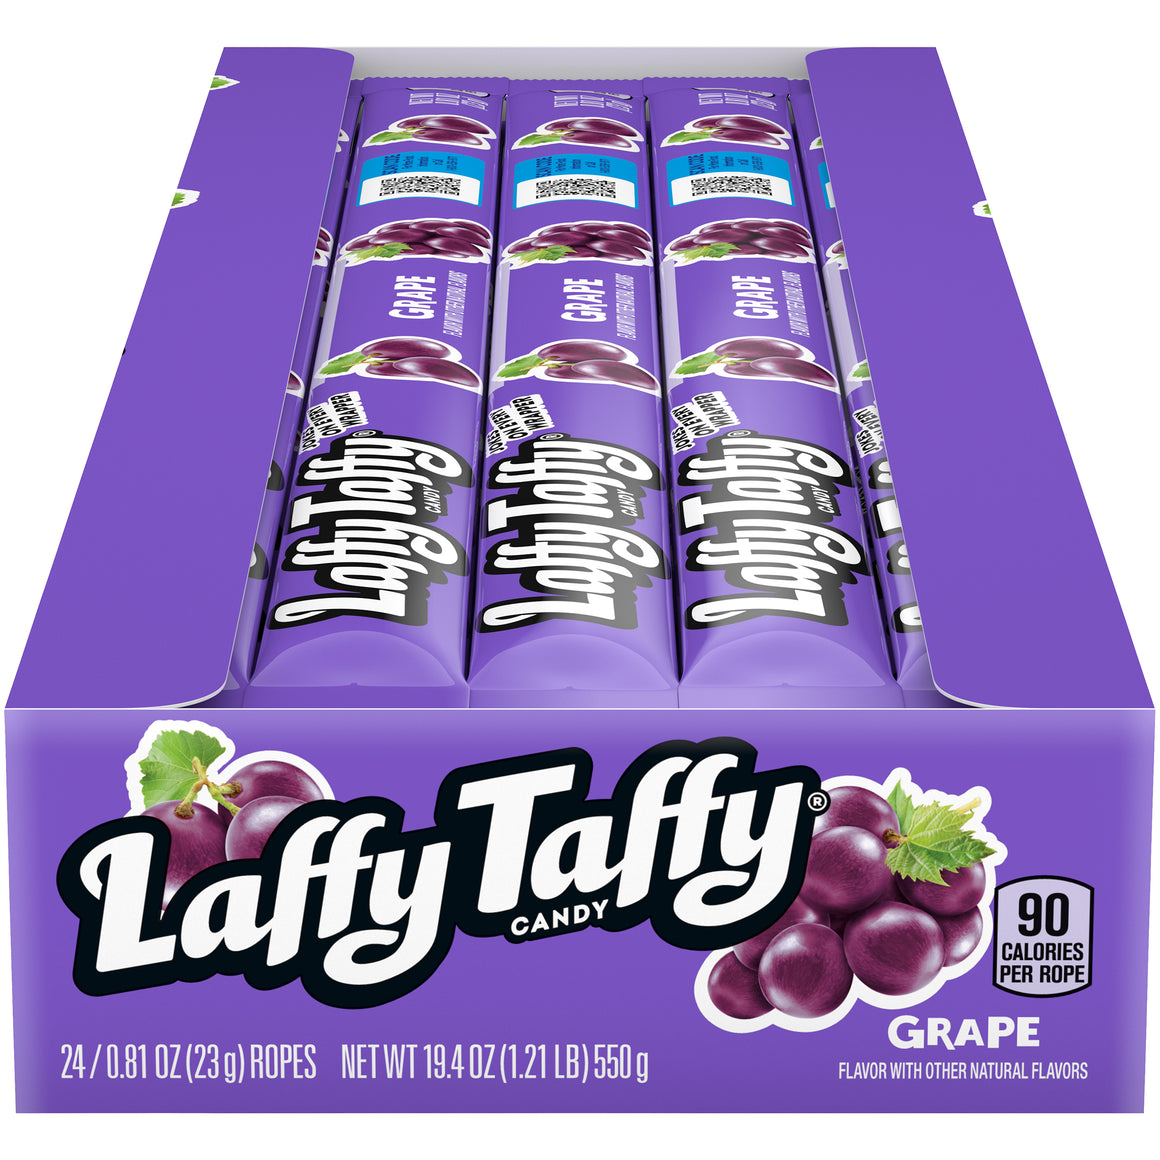 All City Candy Laffy Taffy Grape Rope .81-oz. - 1 Piece Taffy Ferrara Candy Company For fresh candy and great service, visit www.allcitycandy.com